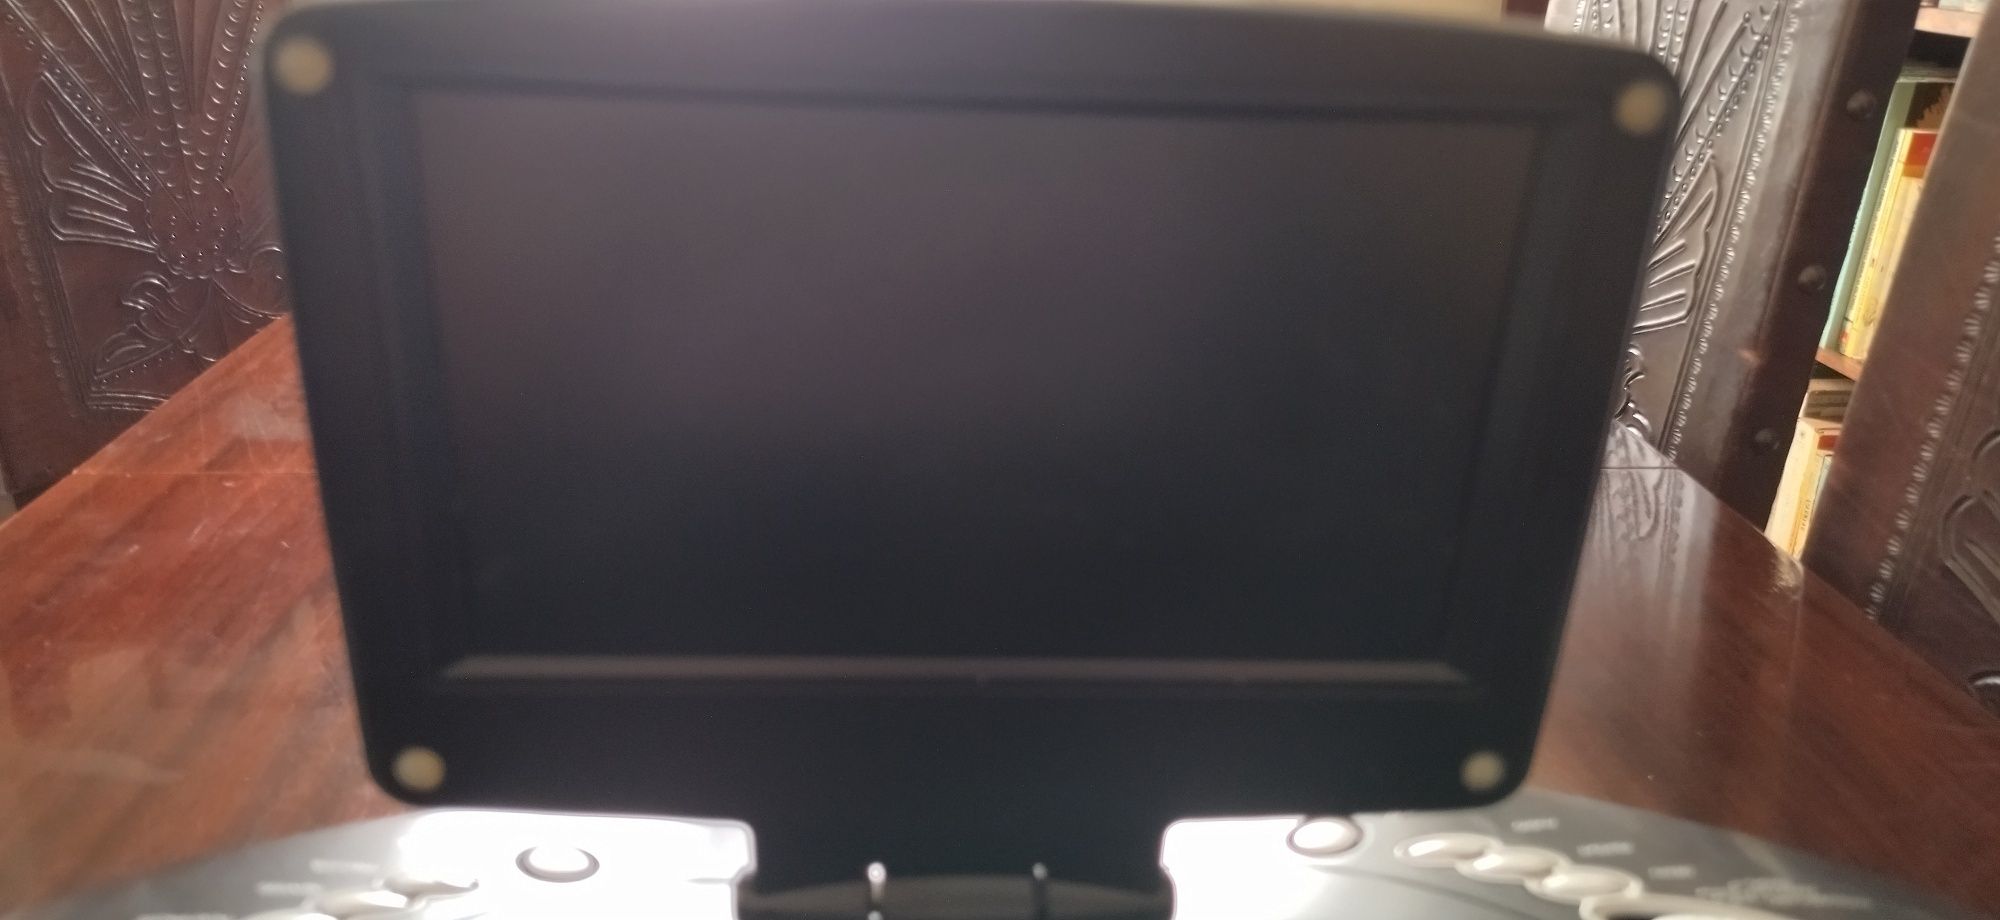 Sistema de rádio/DVD portátil com monitor TFT 18 cm/7" - MEDION